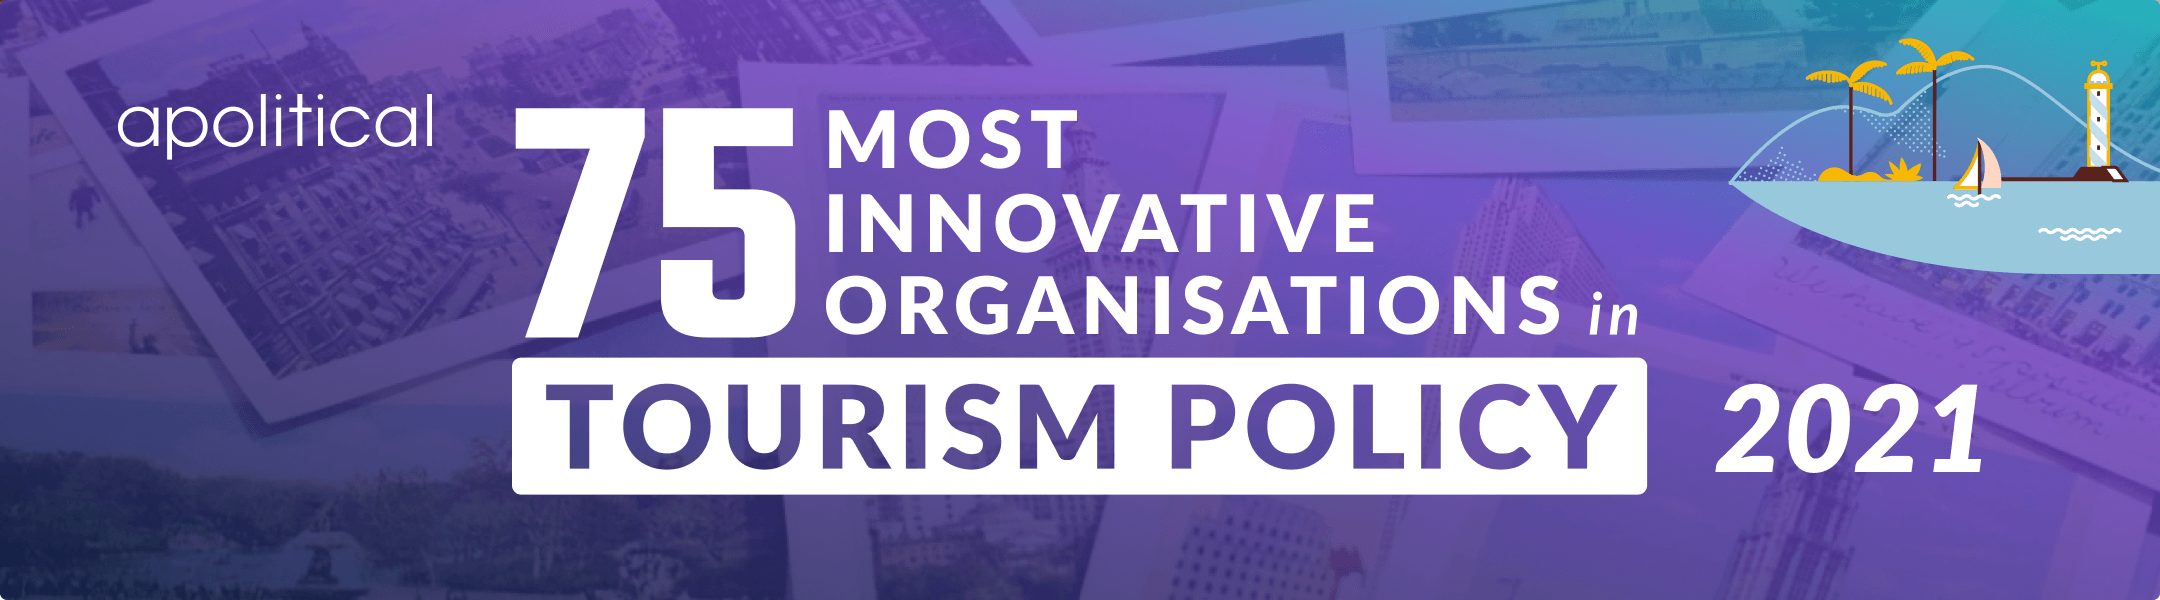 governmental tourism organizations